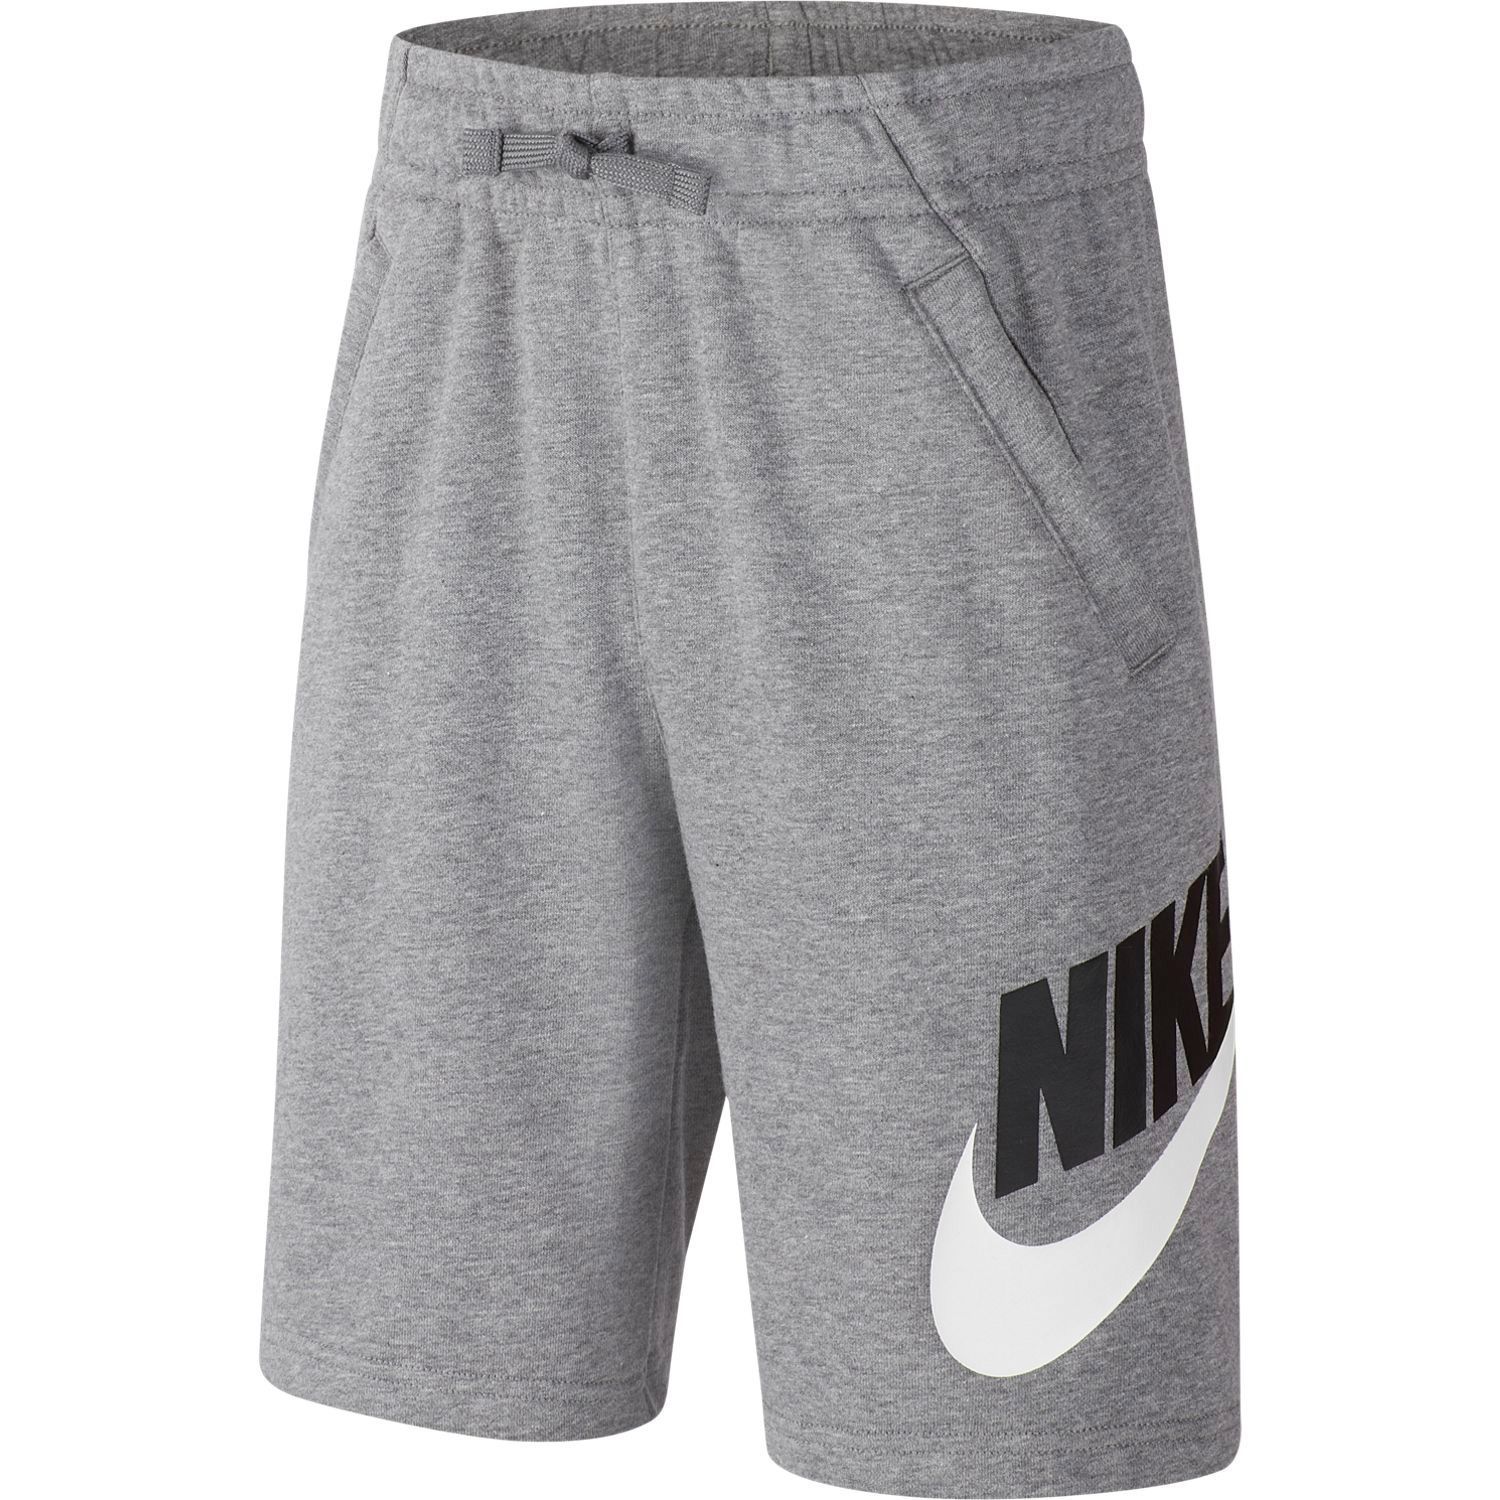 nike grey shorts boys